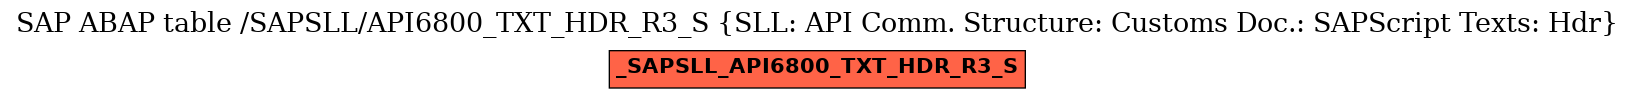 E-R Diagram for table /SAPSLL/API6800_TXT_HDR_R3_S (SLL: API Comm. Structure: Customs Doc.: SAPScript Texts: Hdr)